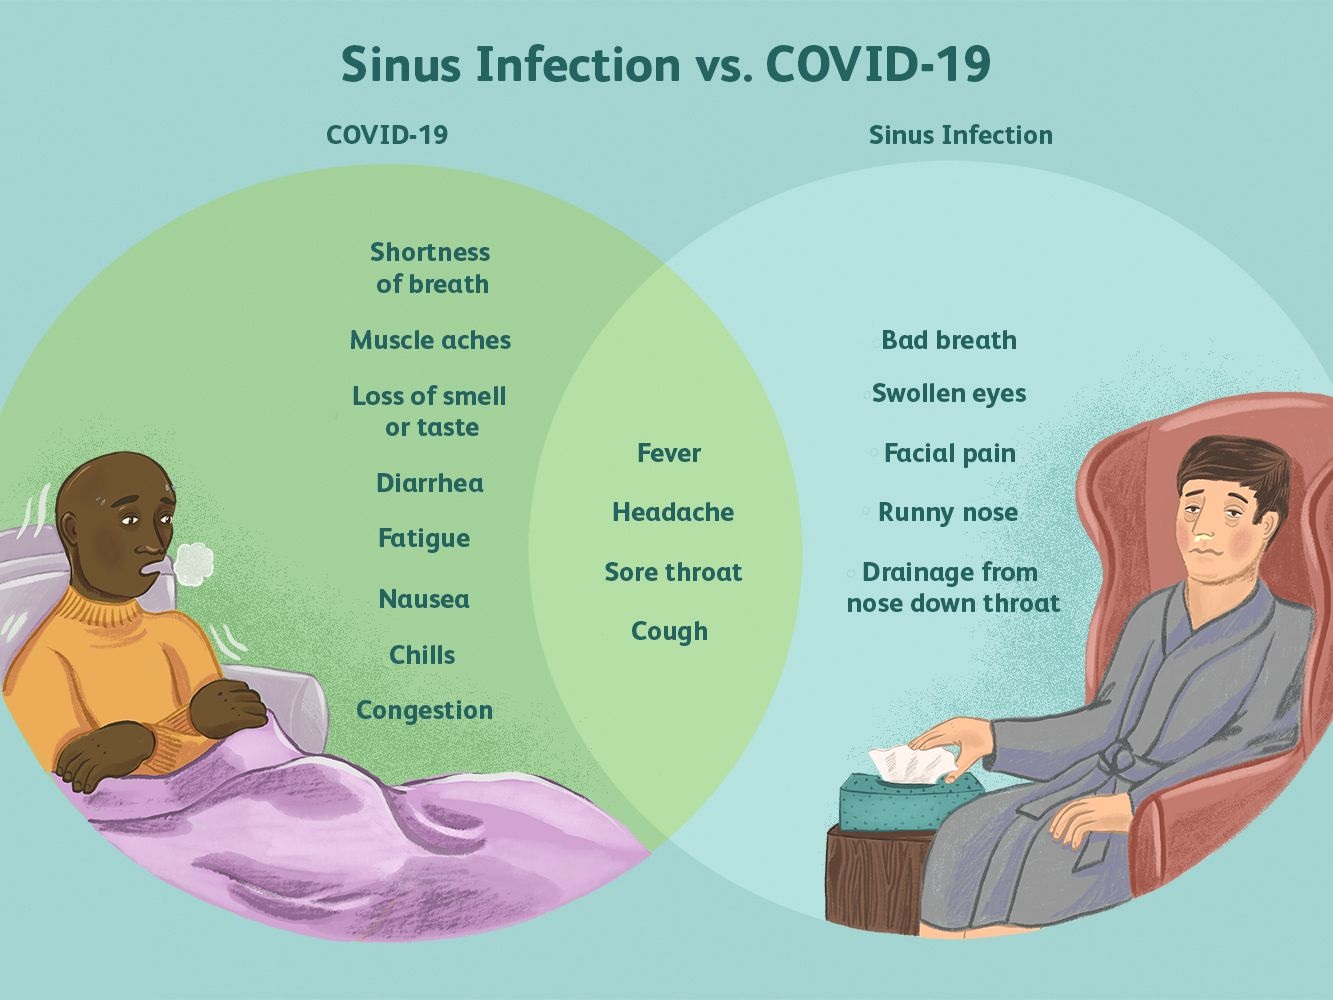 Sinus Infection vs COVID-19